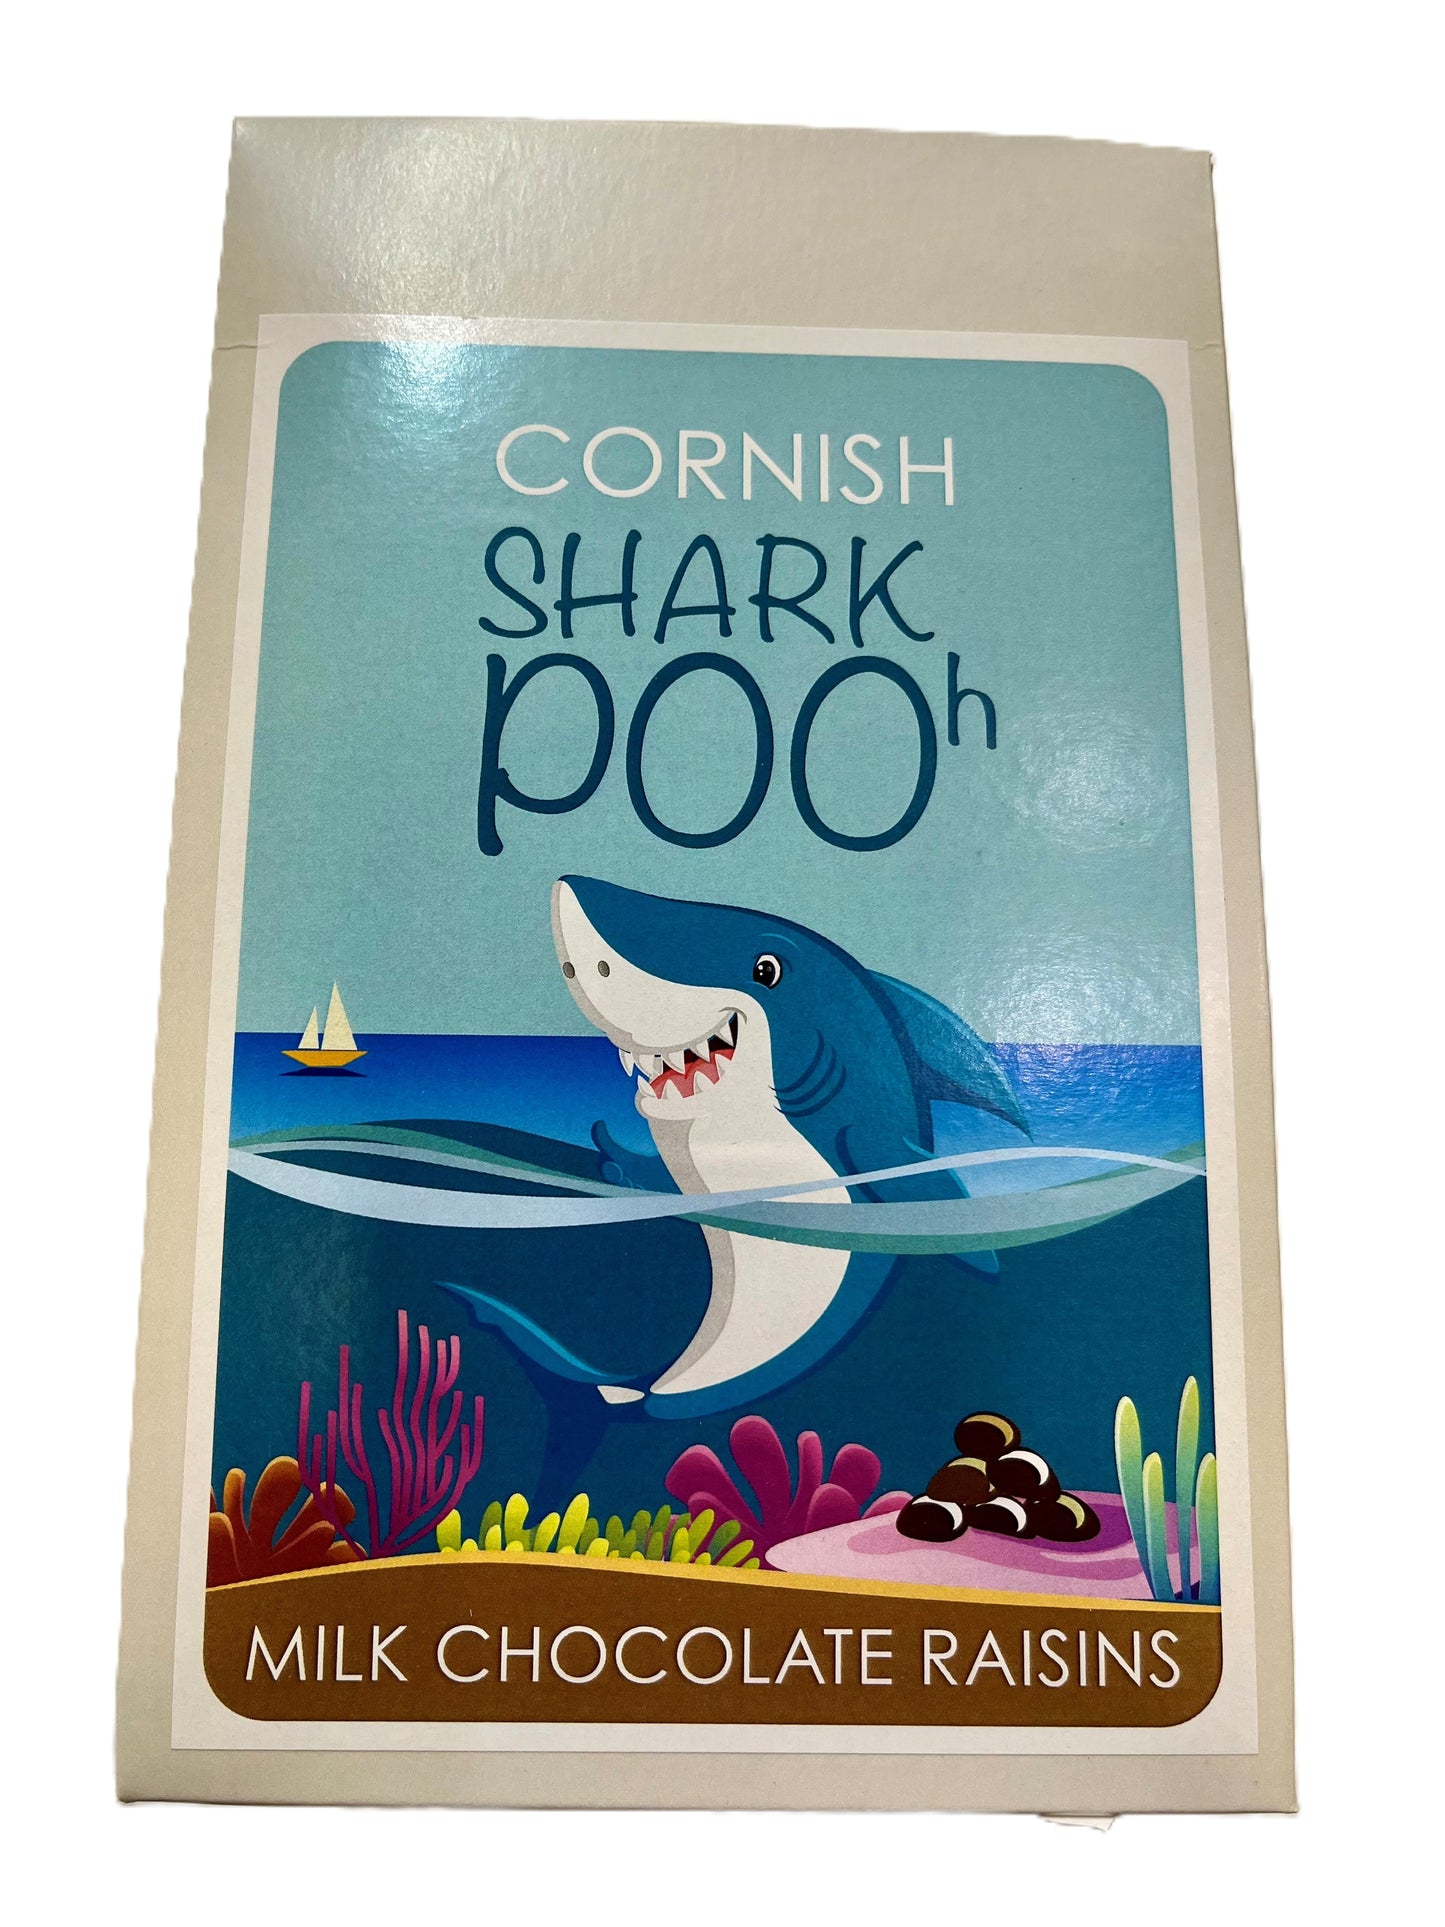 Cornish Shark Pooh - Milk Chocolate Raisins